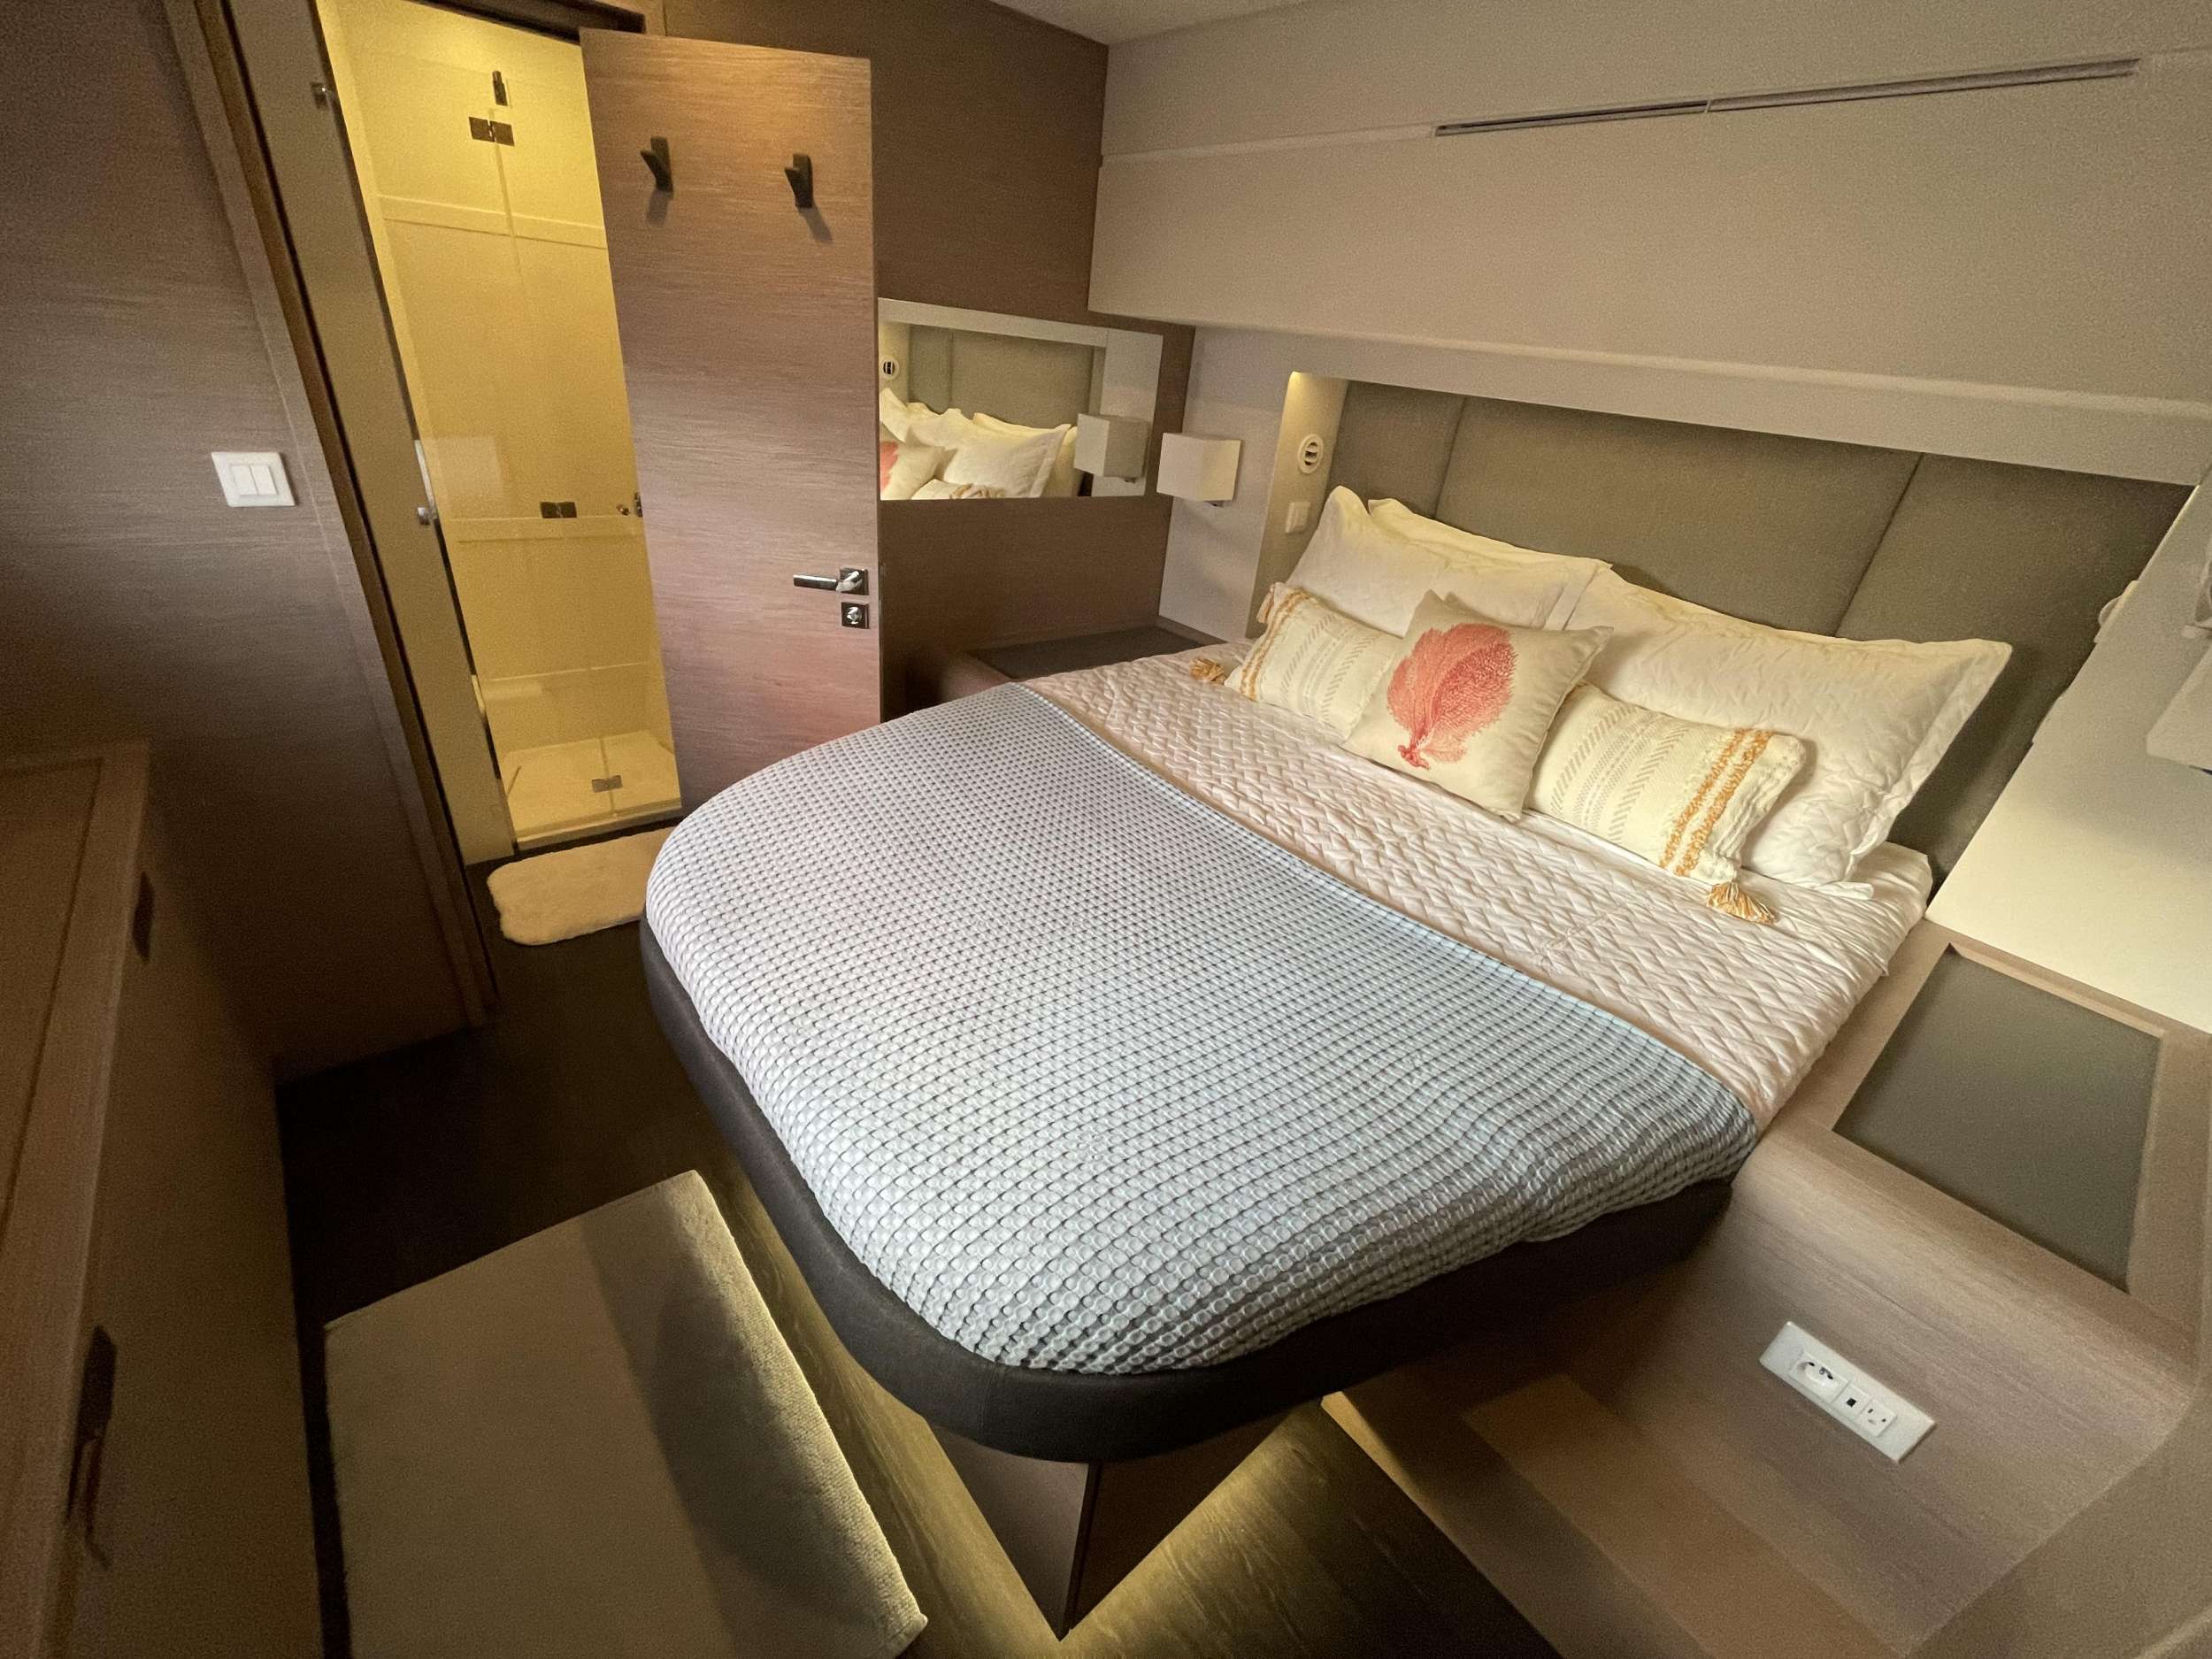 KRAZY KAT Yacht Charter - Guest cabin 2